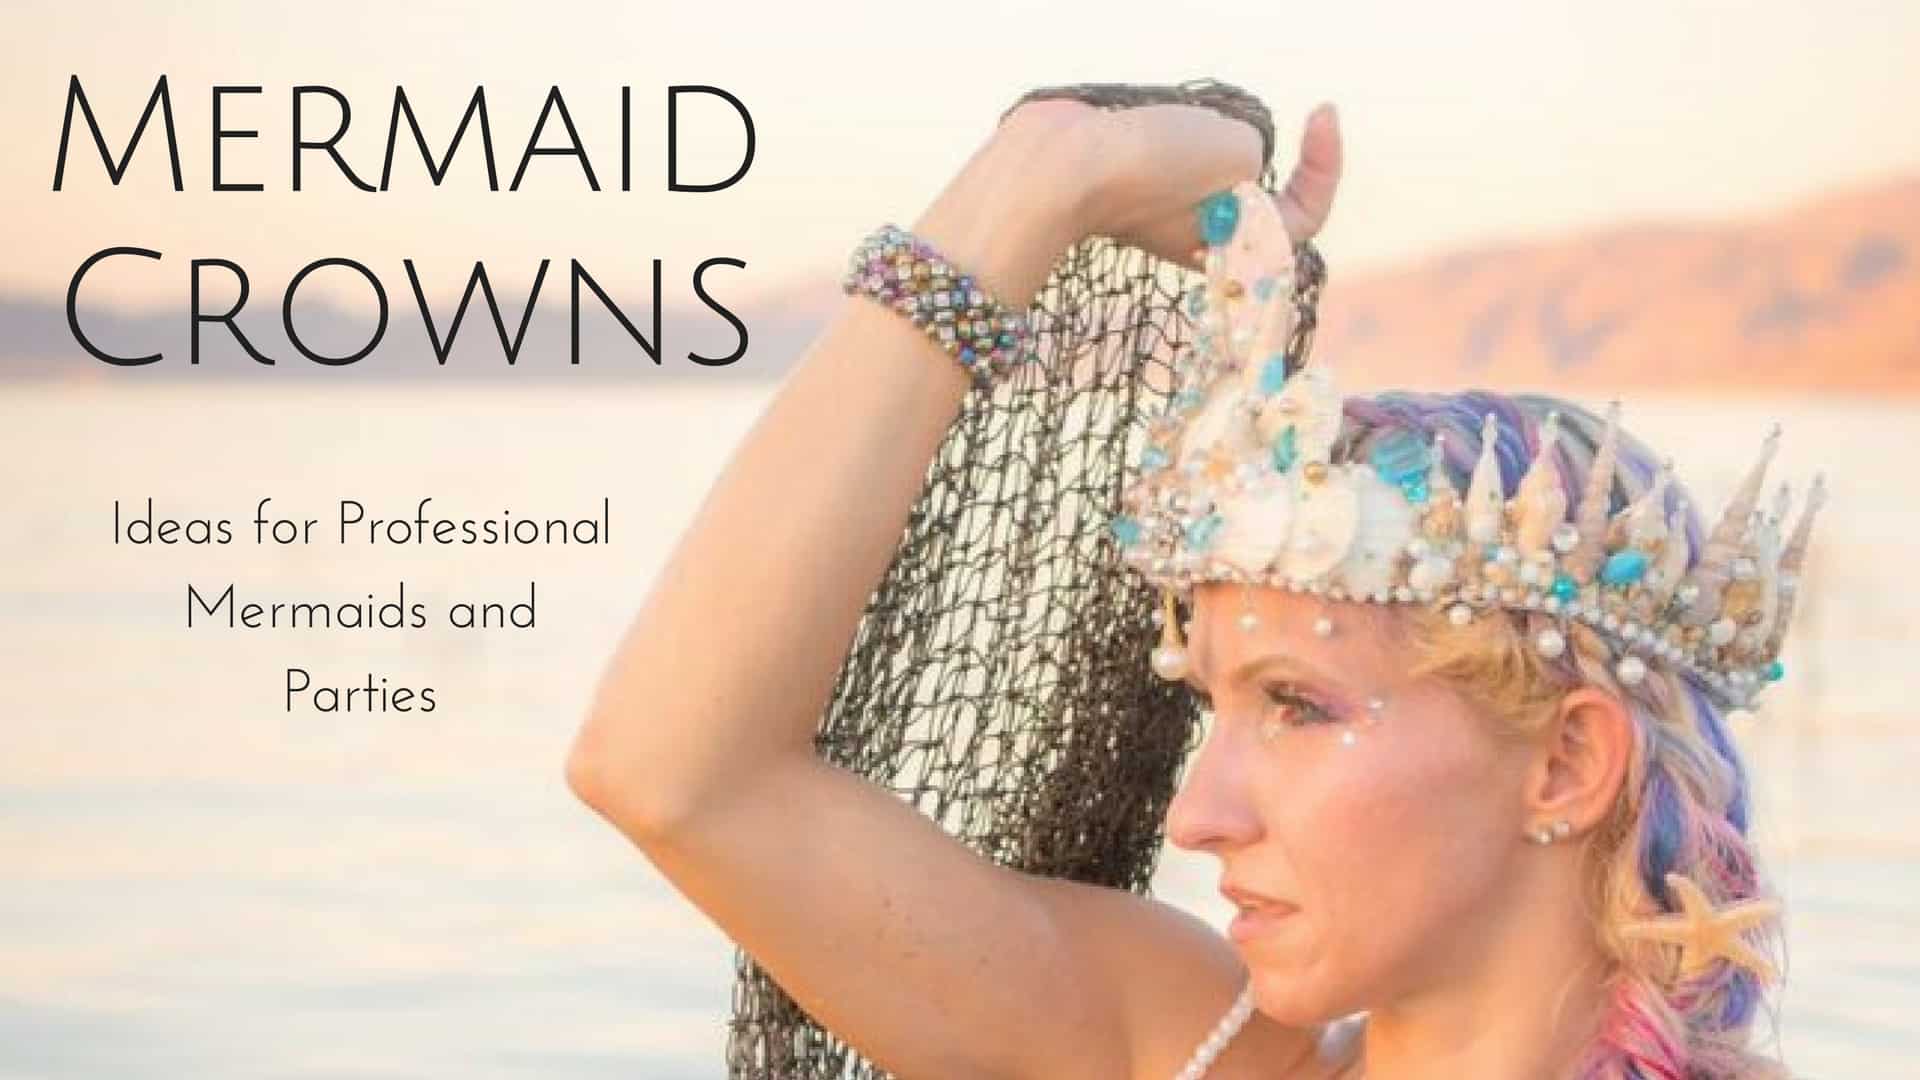 How to Make a DIY Mermaid Crown with Seashells